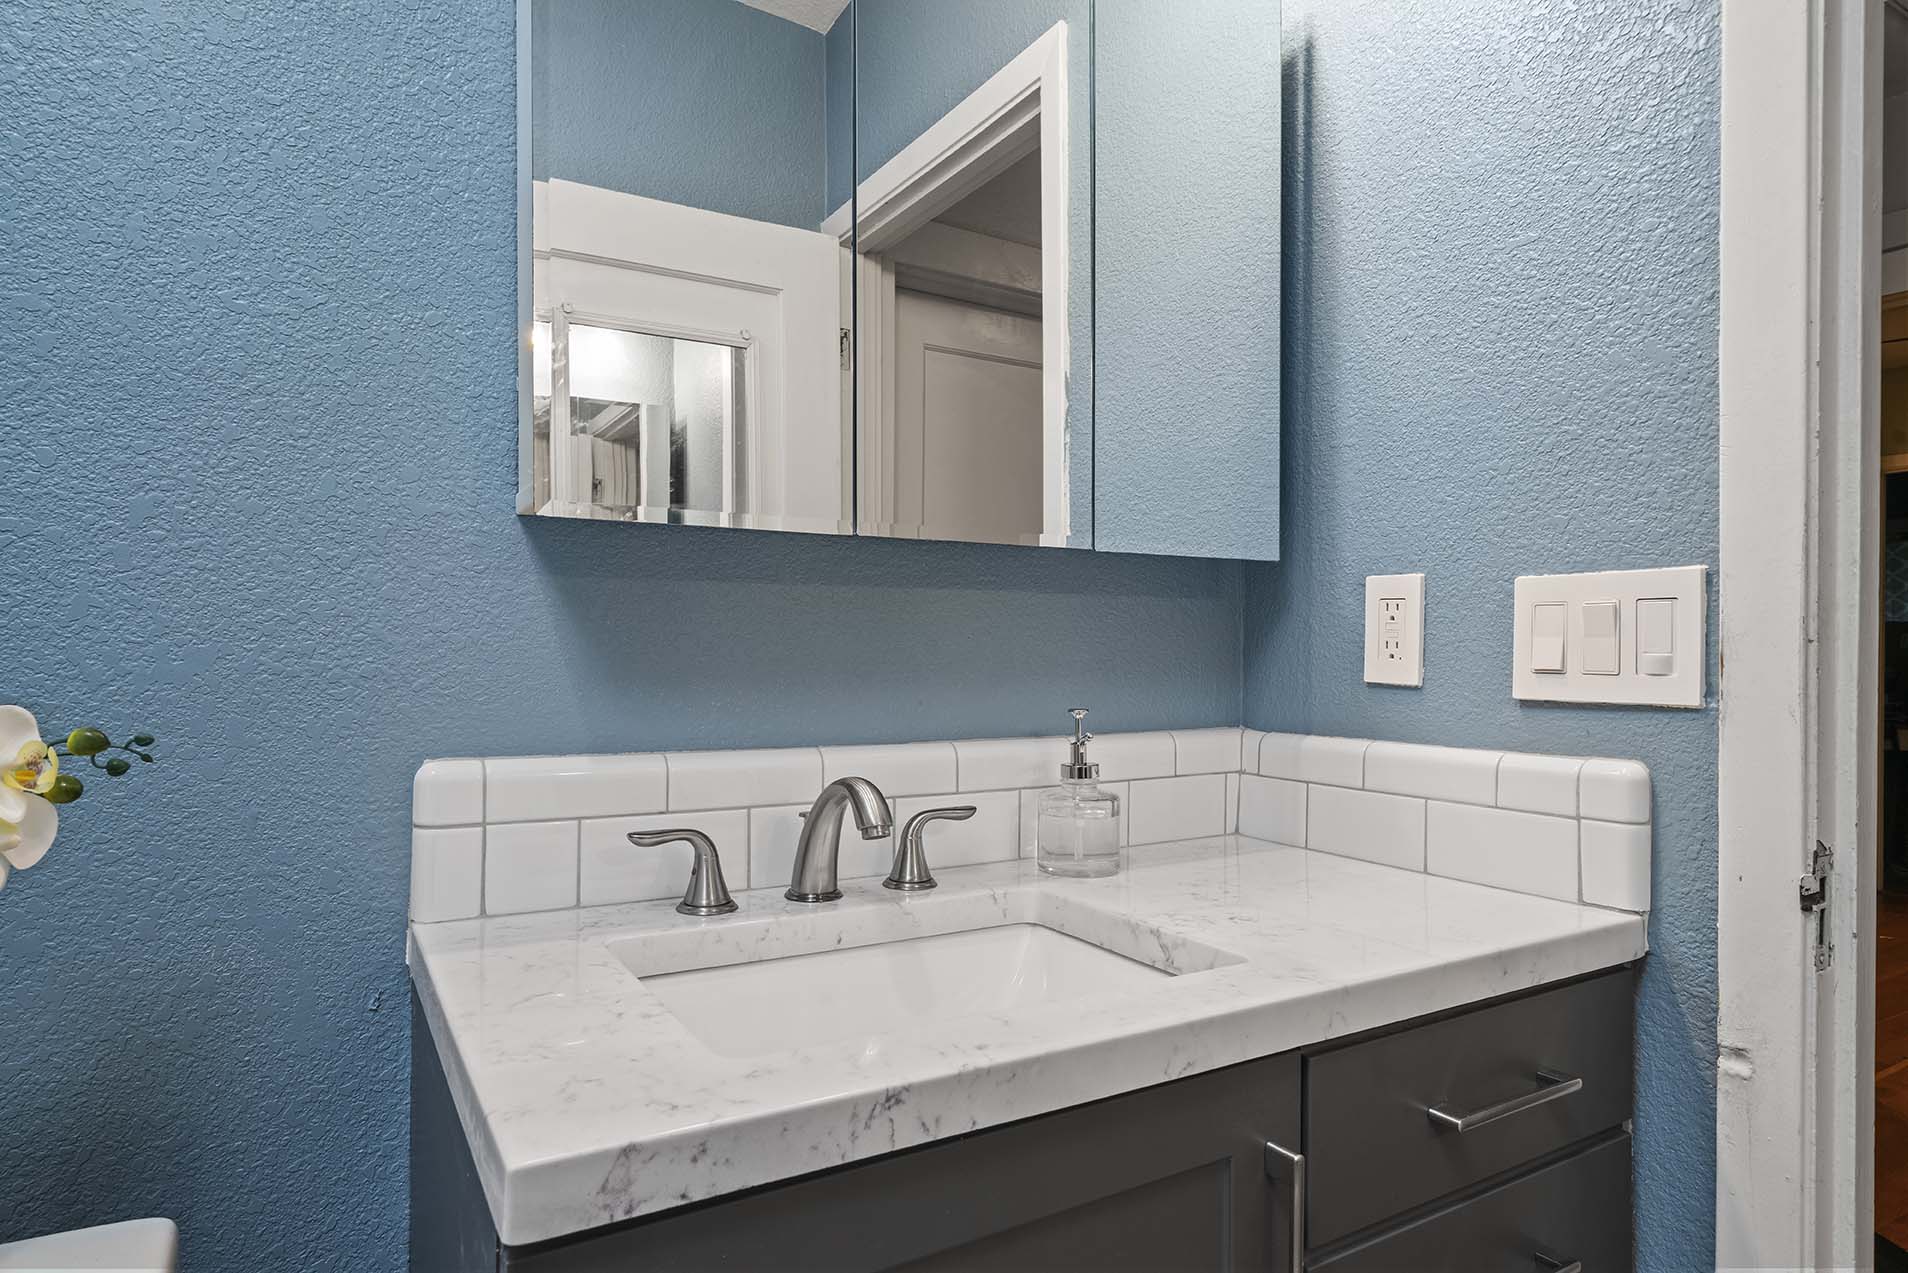 Stupendous Photos Of Bathroom Sink Crossword Clue Concept Kaelexa